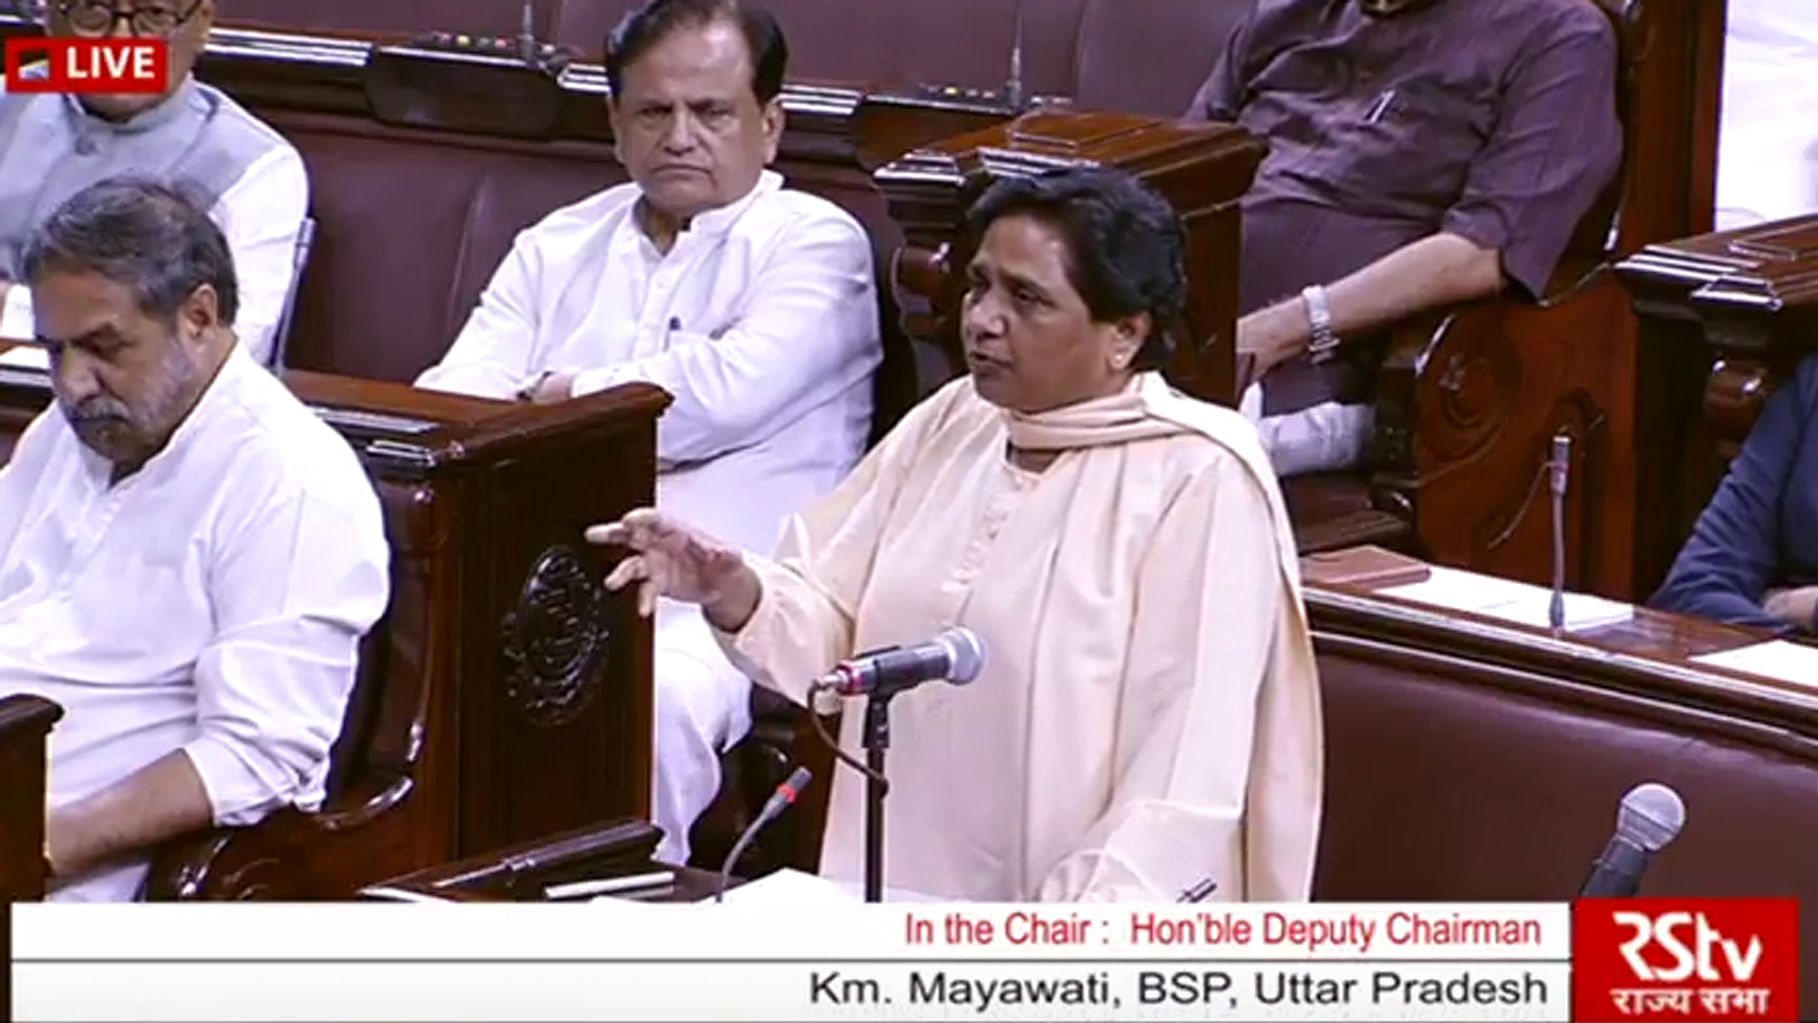 Mayawati in the Rajya Sabha on Wednesday, 20 July 2016. (Photo Courtesy: LSTV)